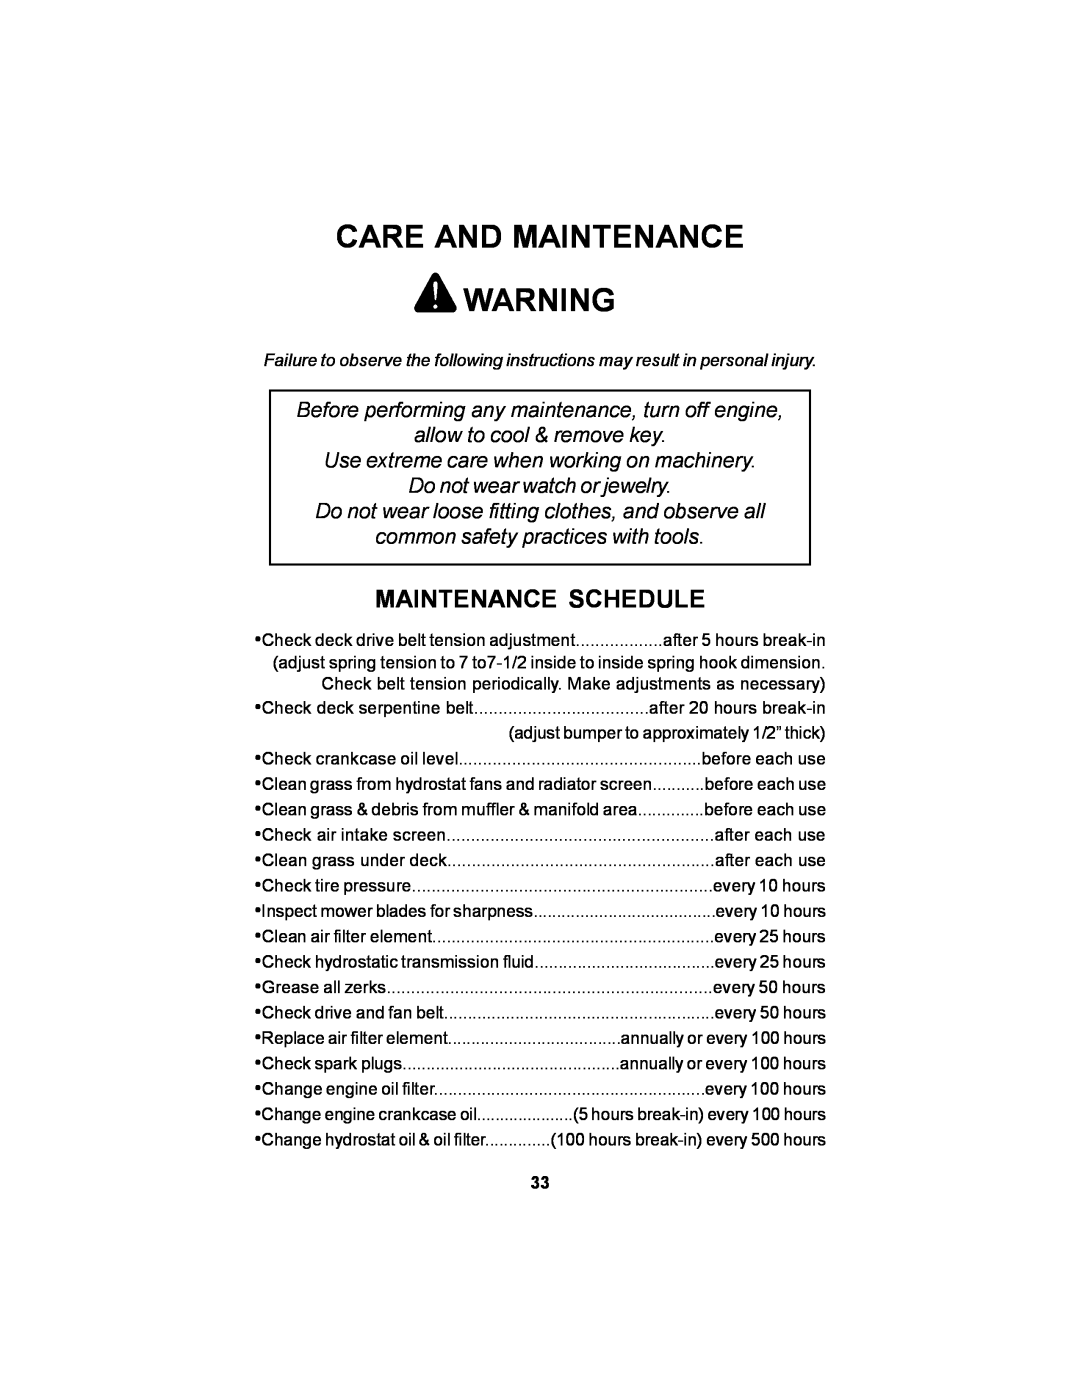 Dixon 12881-106 manual Care And Maintenance, Maintenance Schedule 